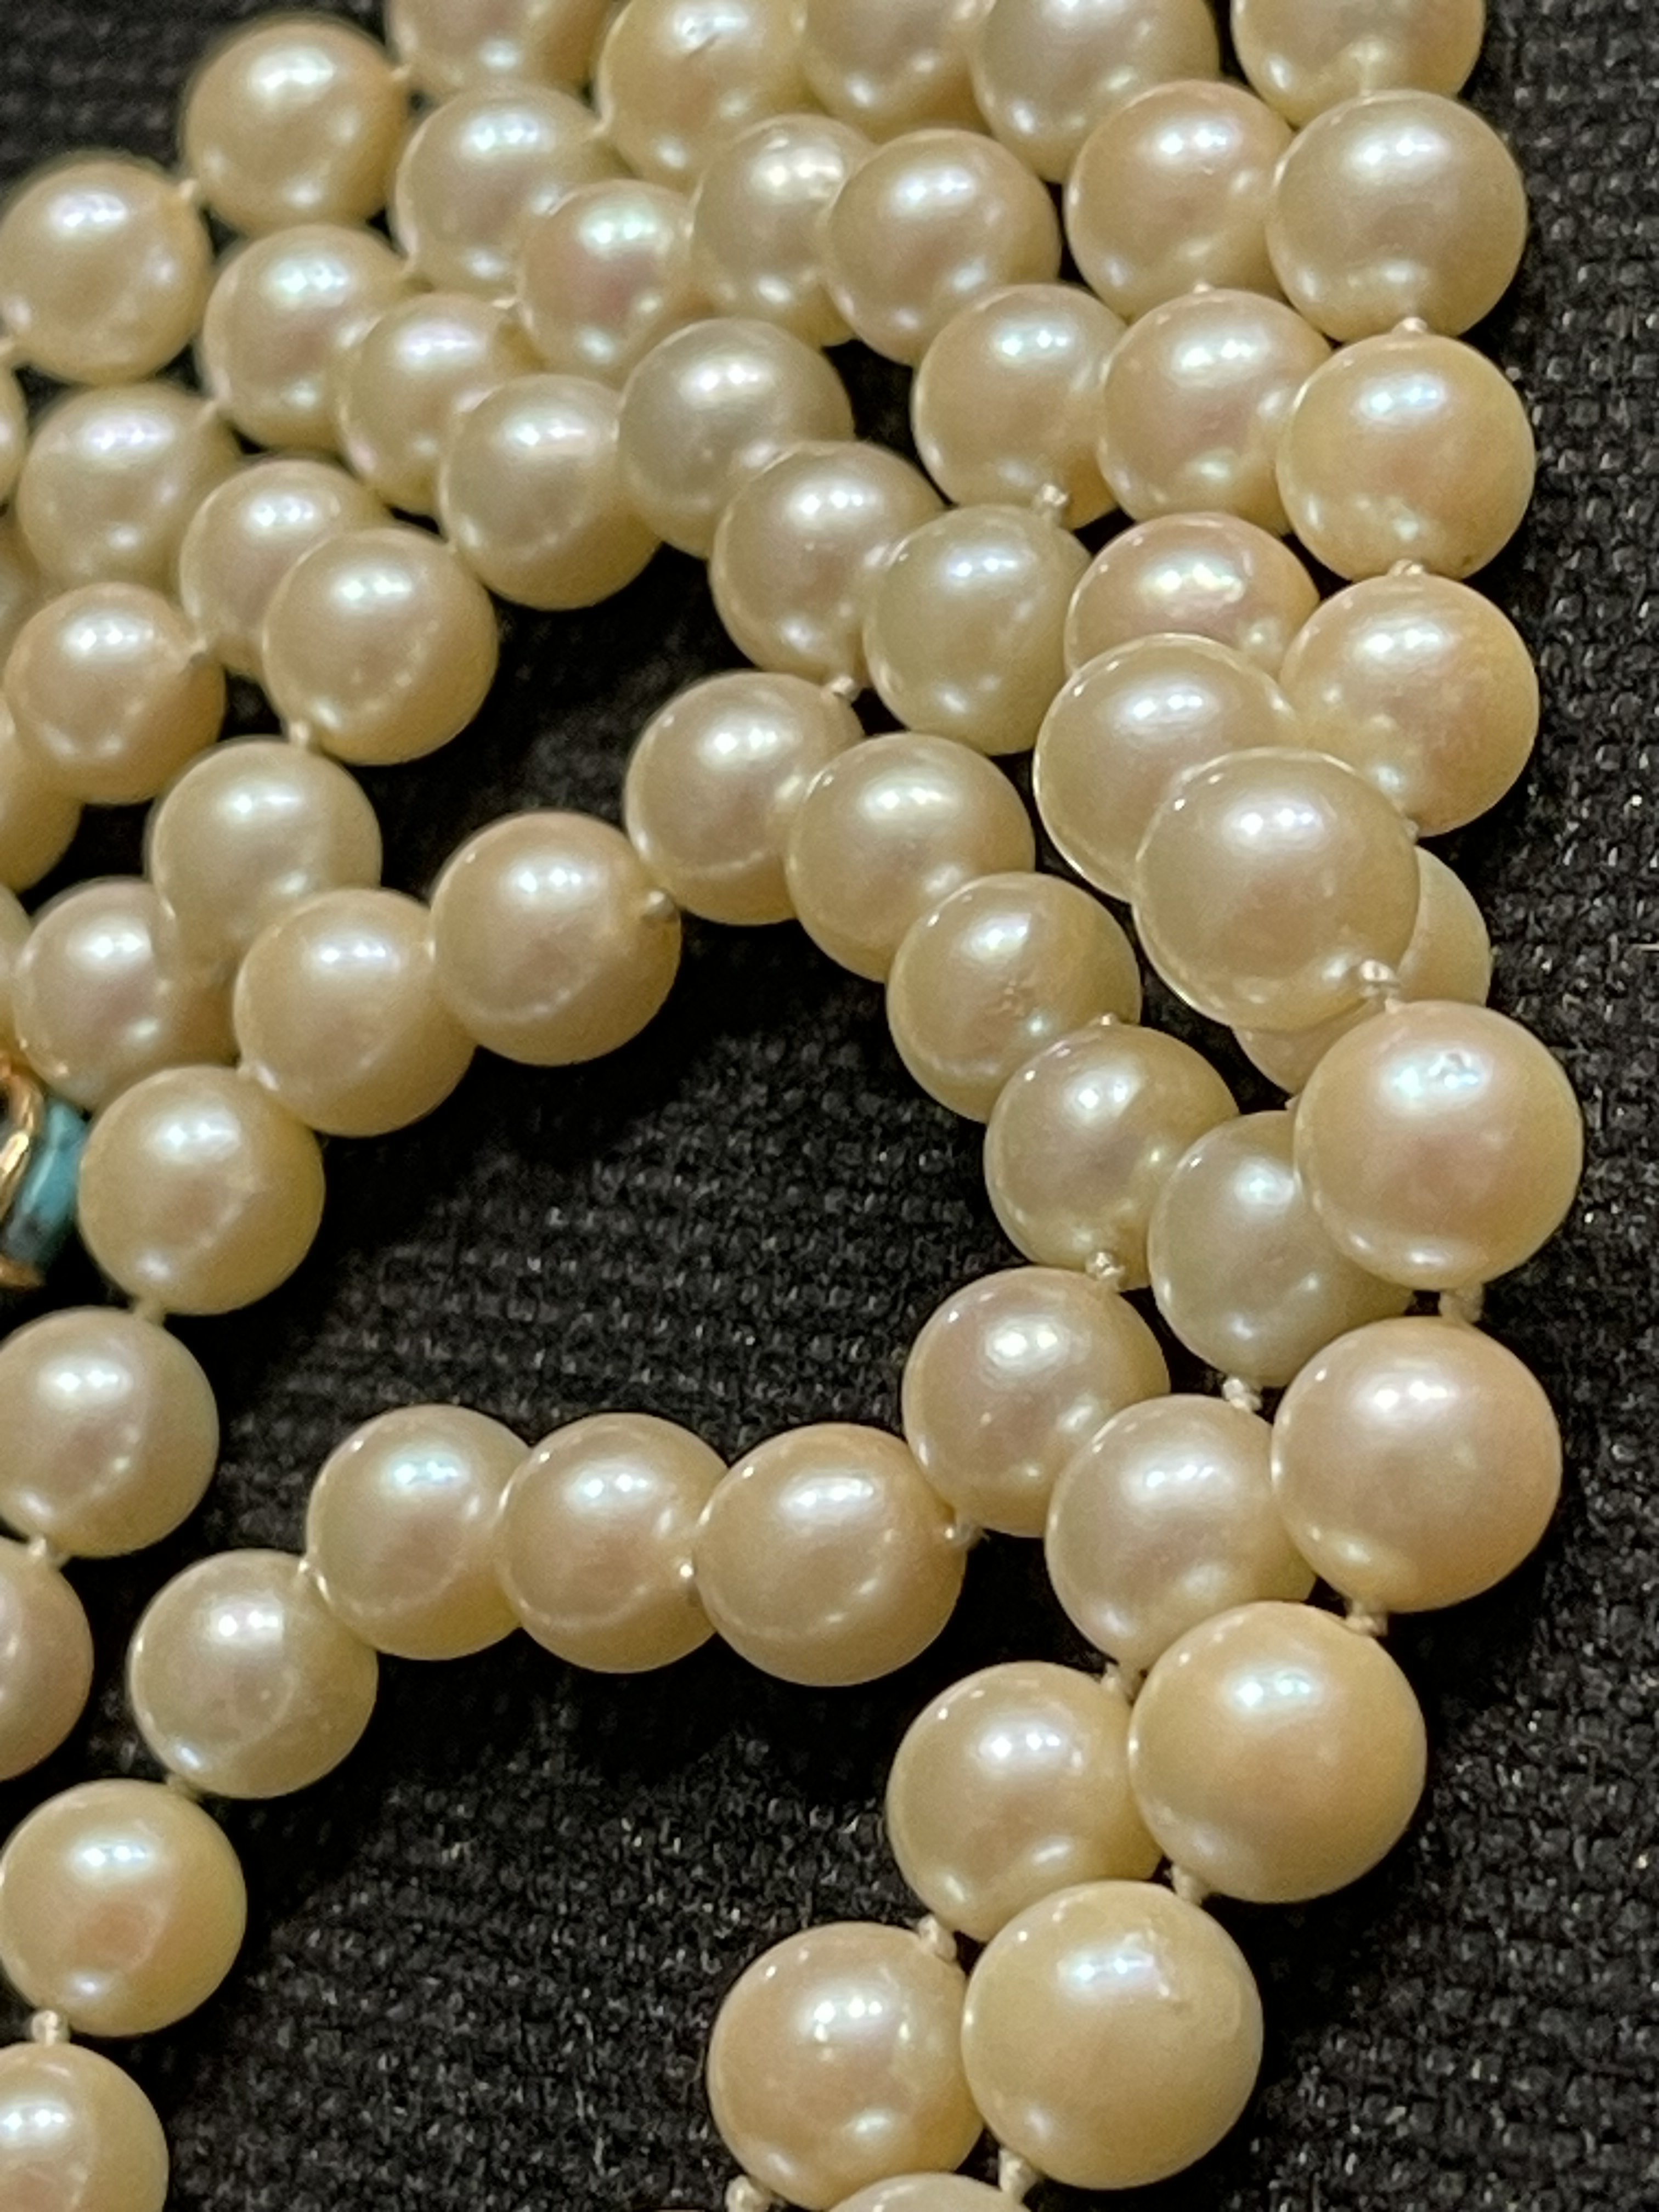 Help Identifying Pearls Please